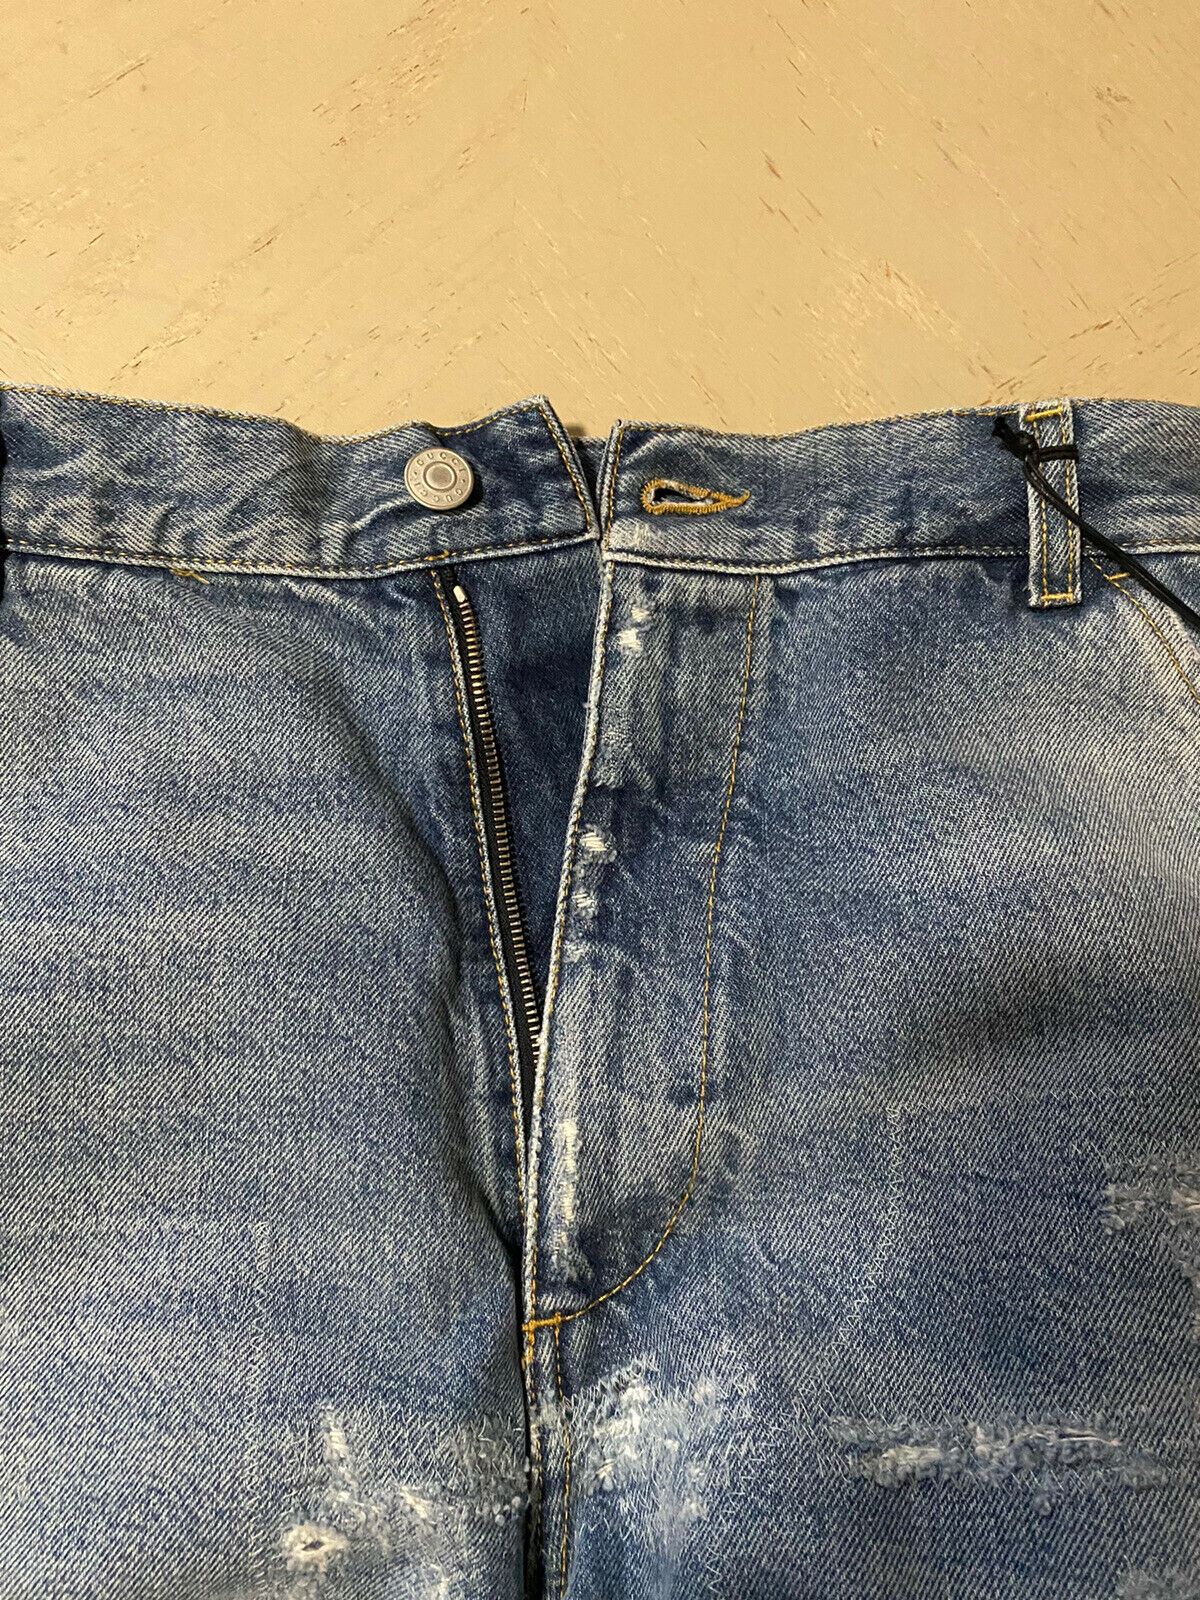 NWT $1500 Gucci Mens Short Jeans Pants Blue Size 30 US/44 Eu